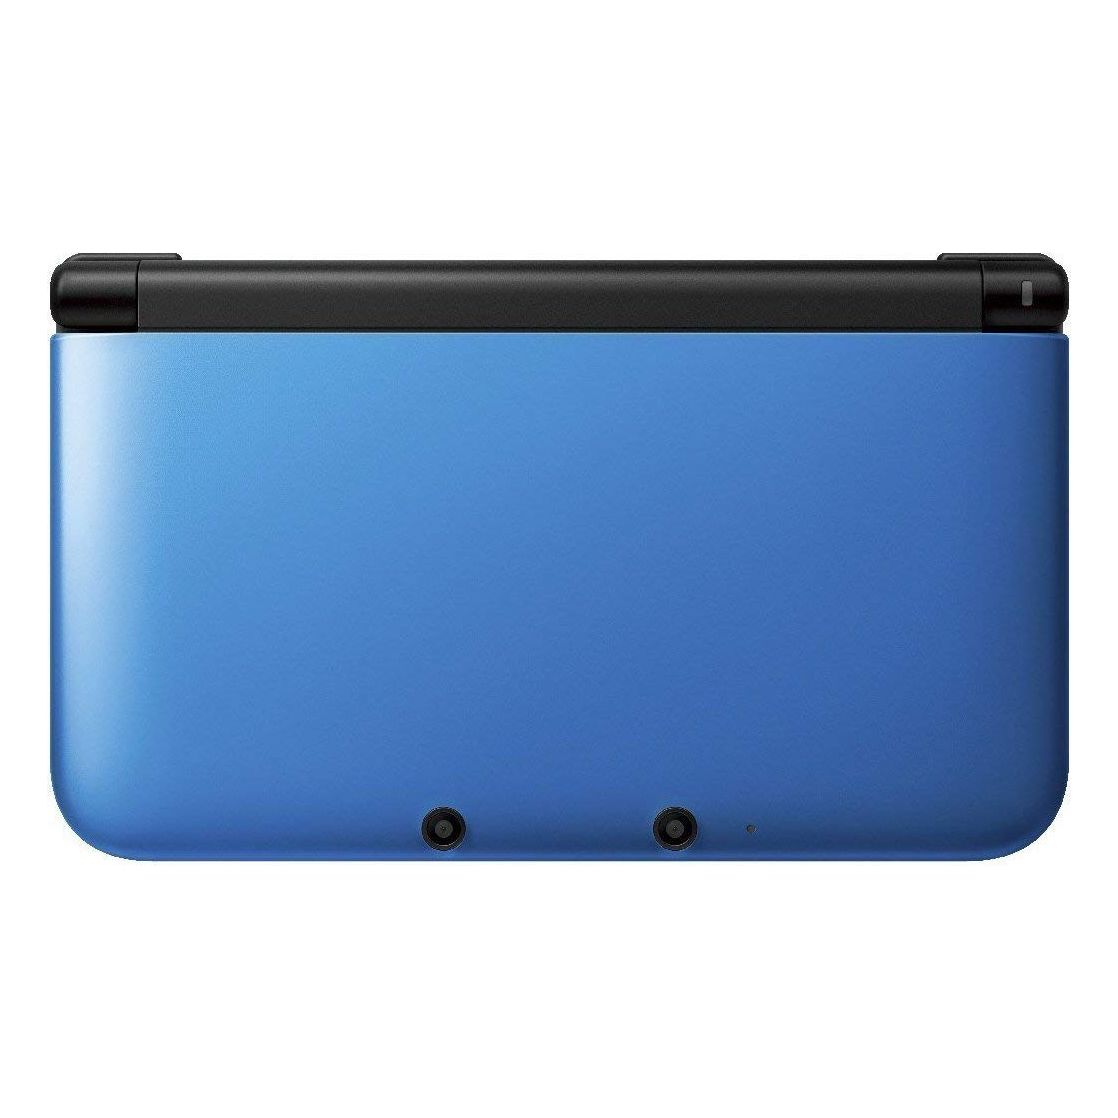 NINTENDO 3DS XL - BLUE/BLACK (used)